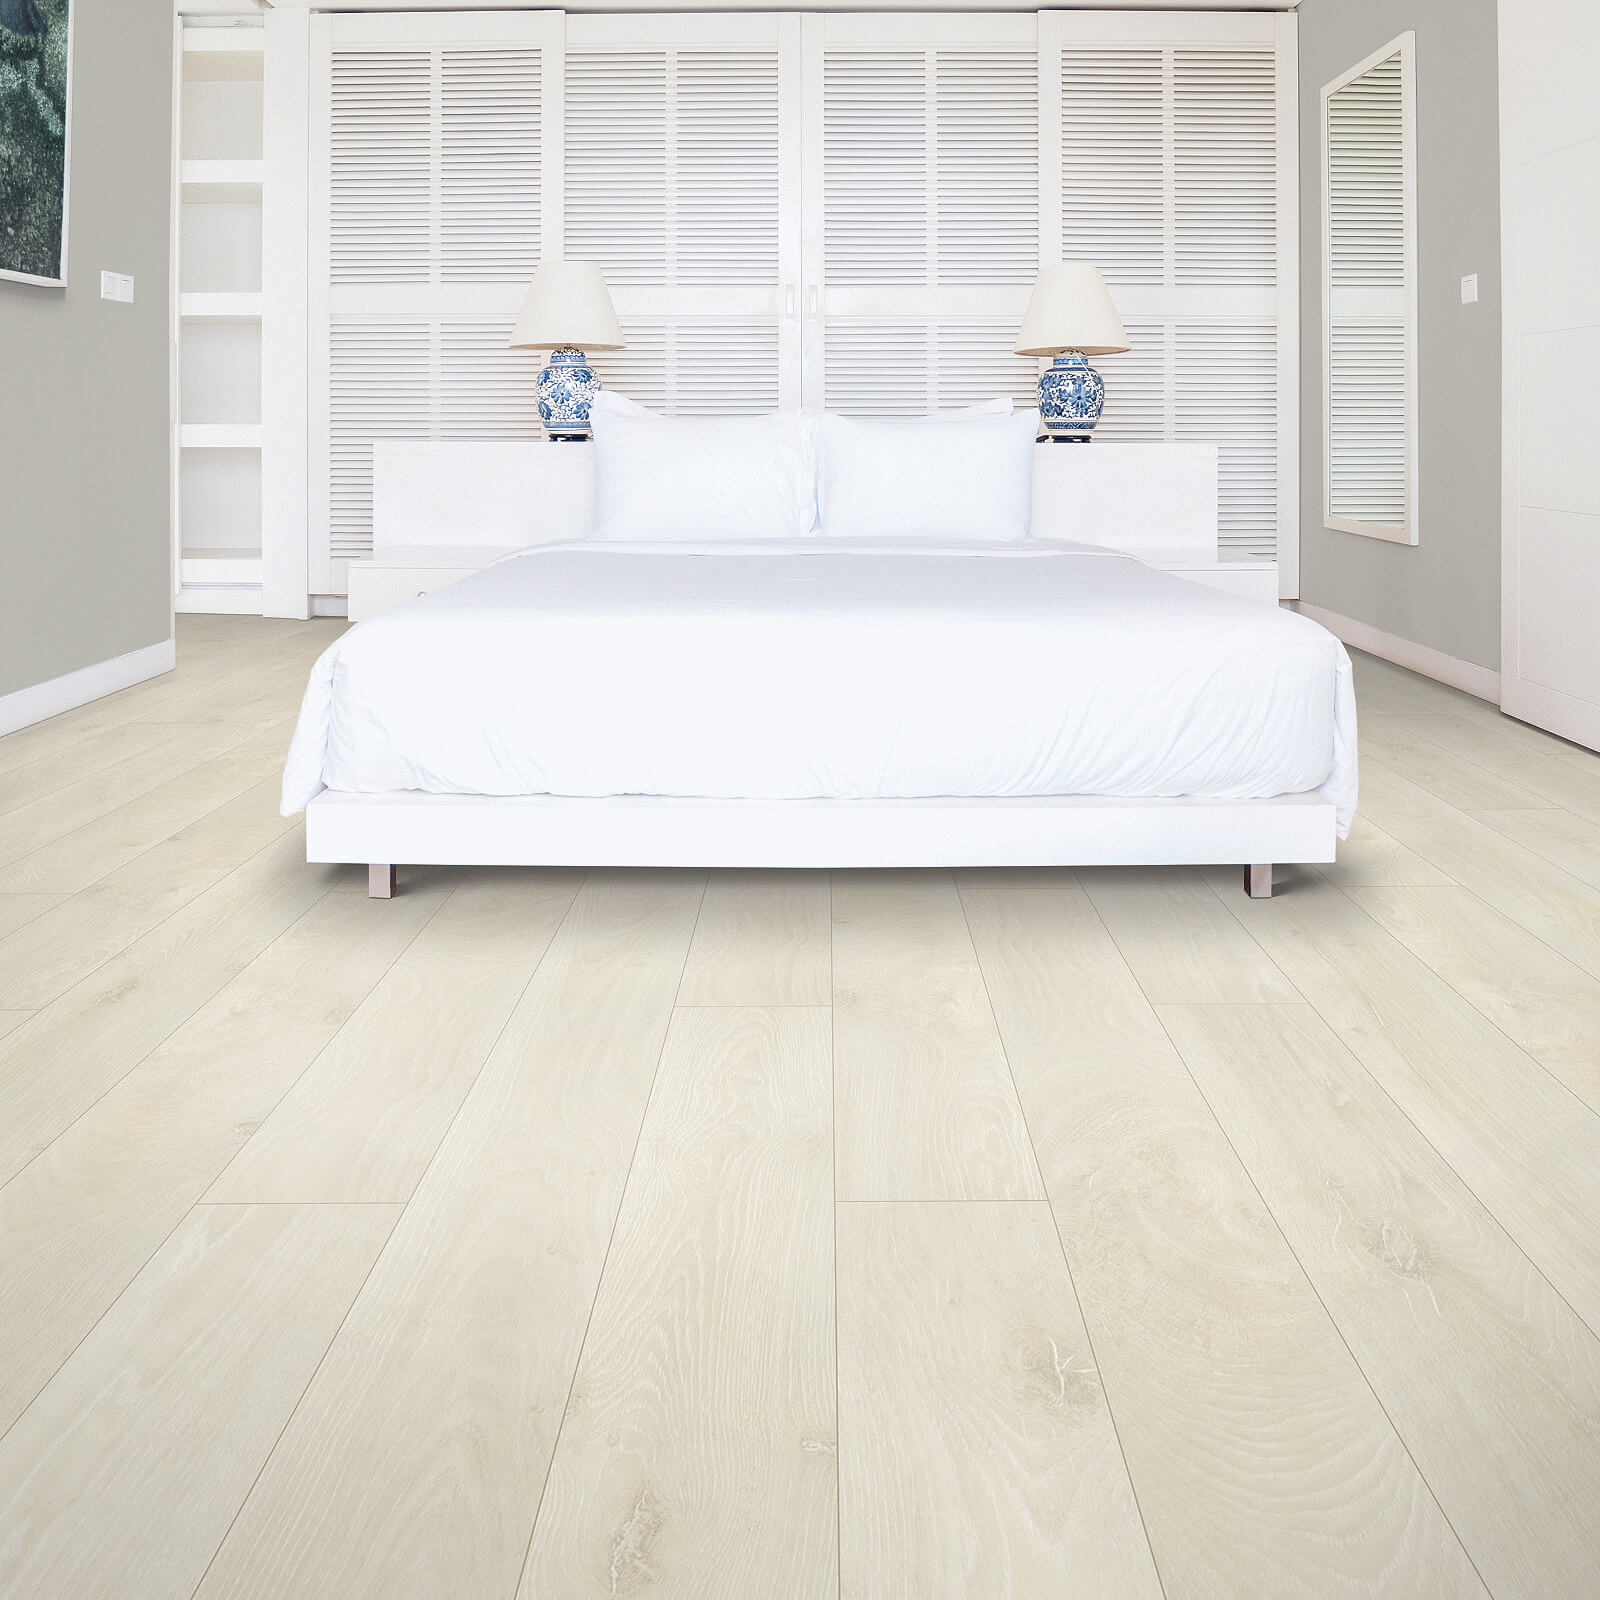 laminate flooring in bedroom, Omaha, NE | Kelly's Carpet Omaha